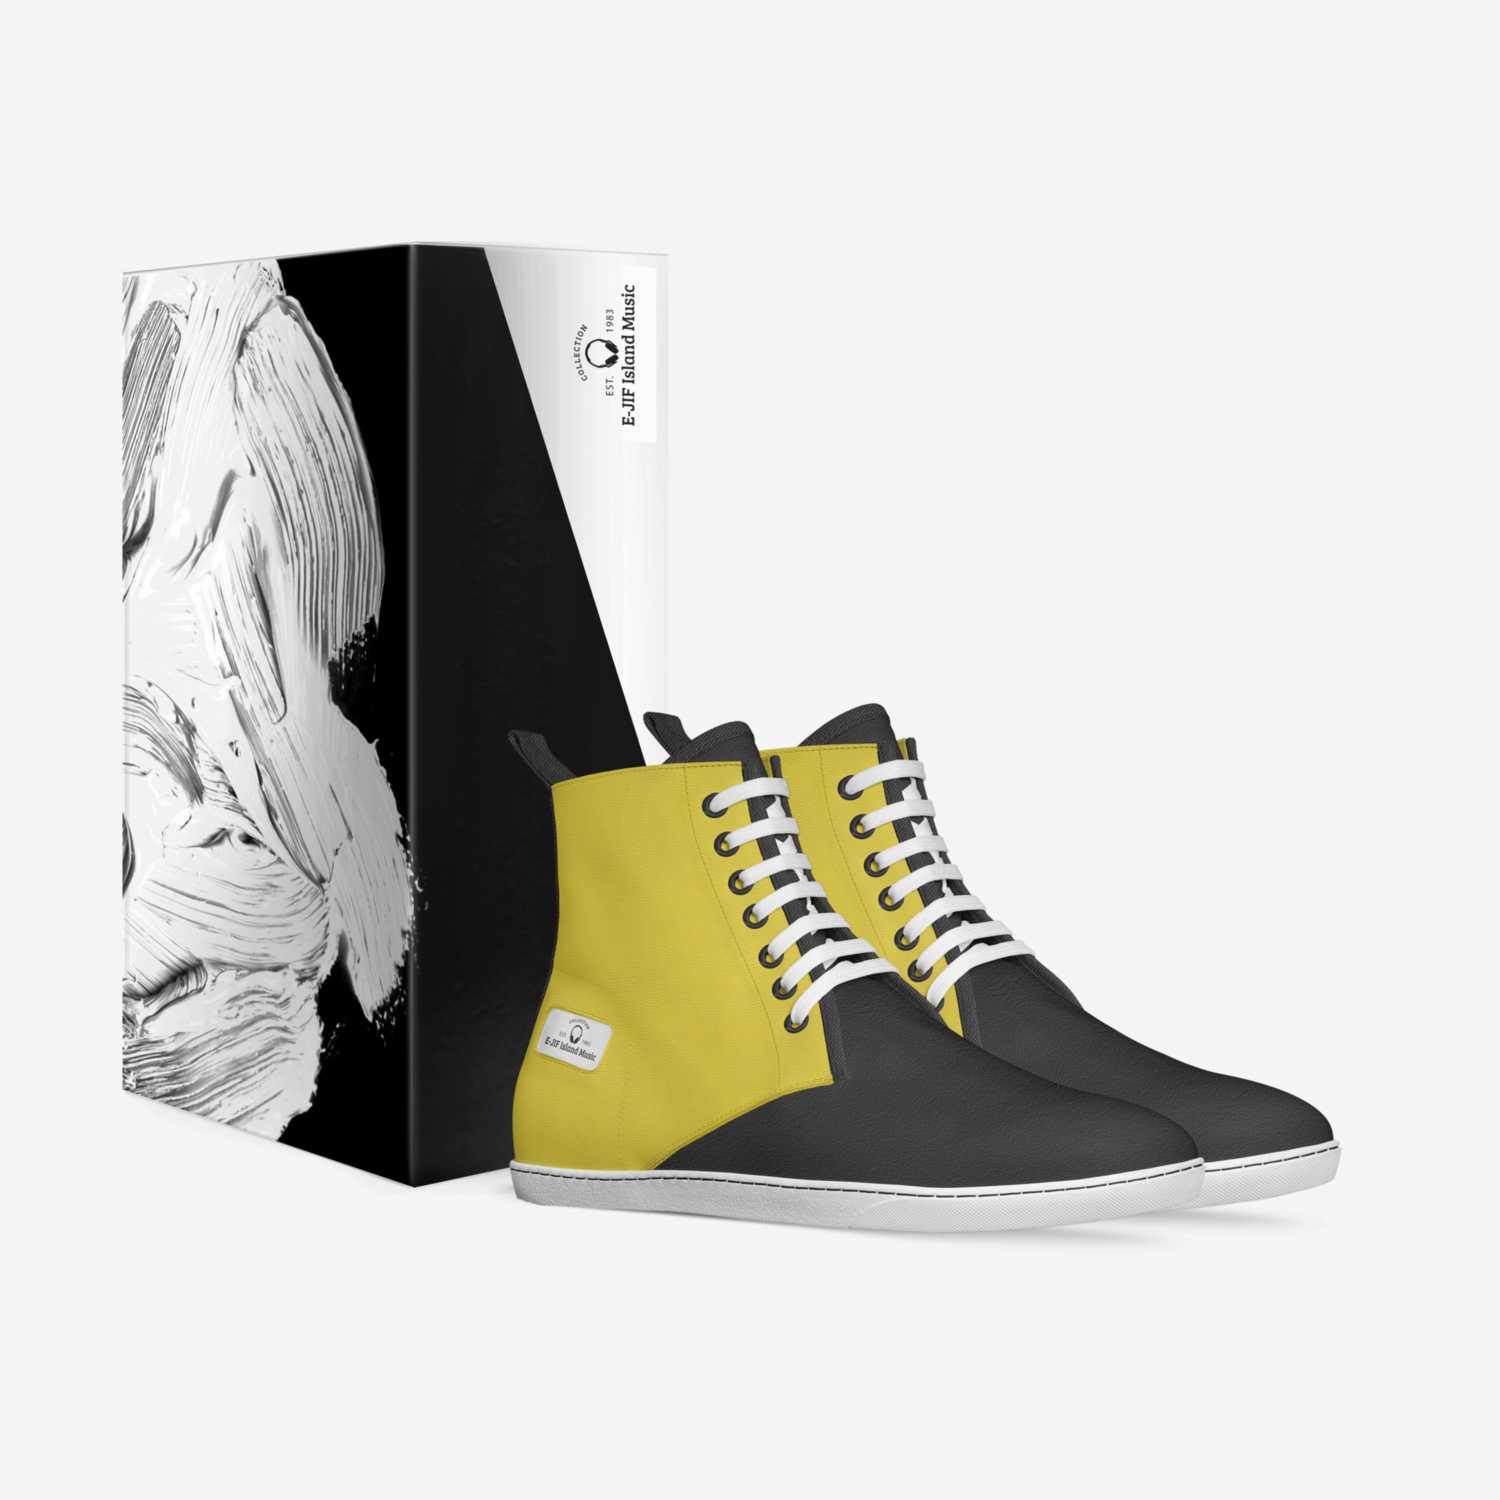 E-JIF custom made in Italy shoes by Lepani Raiyala | Box view